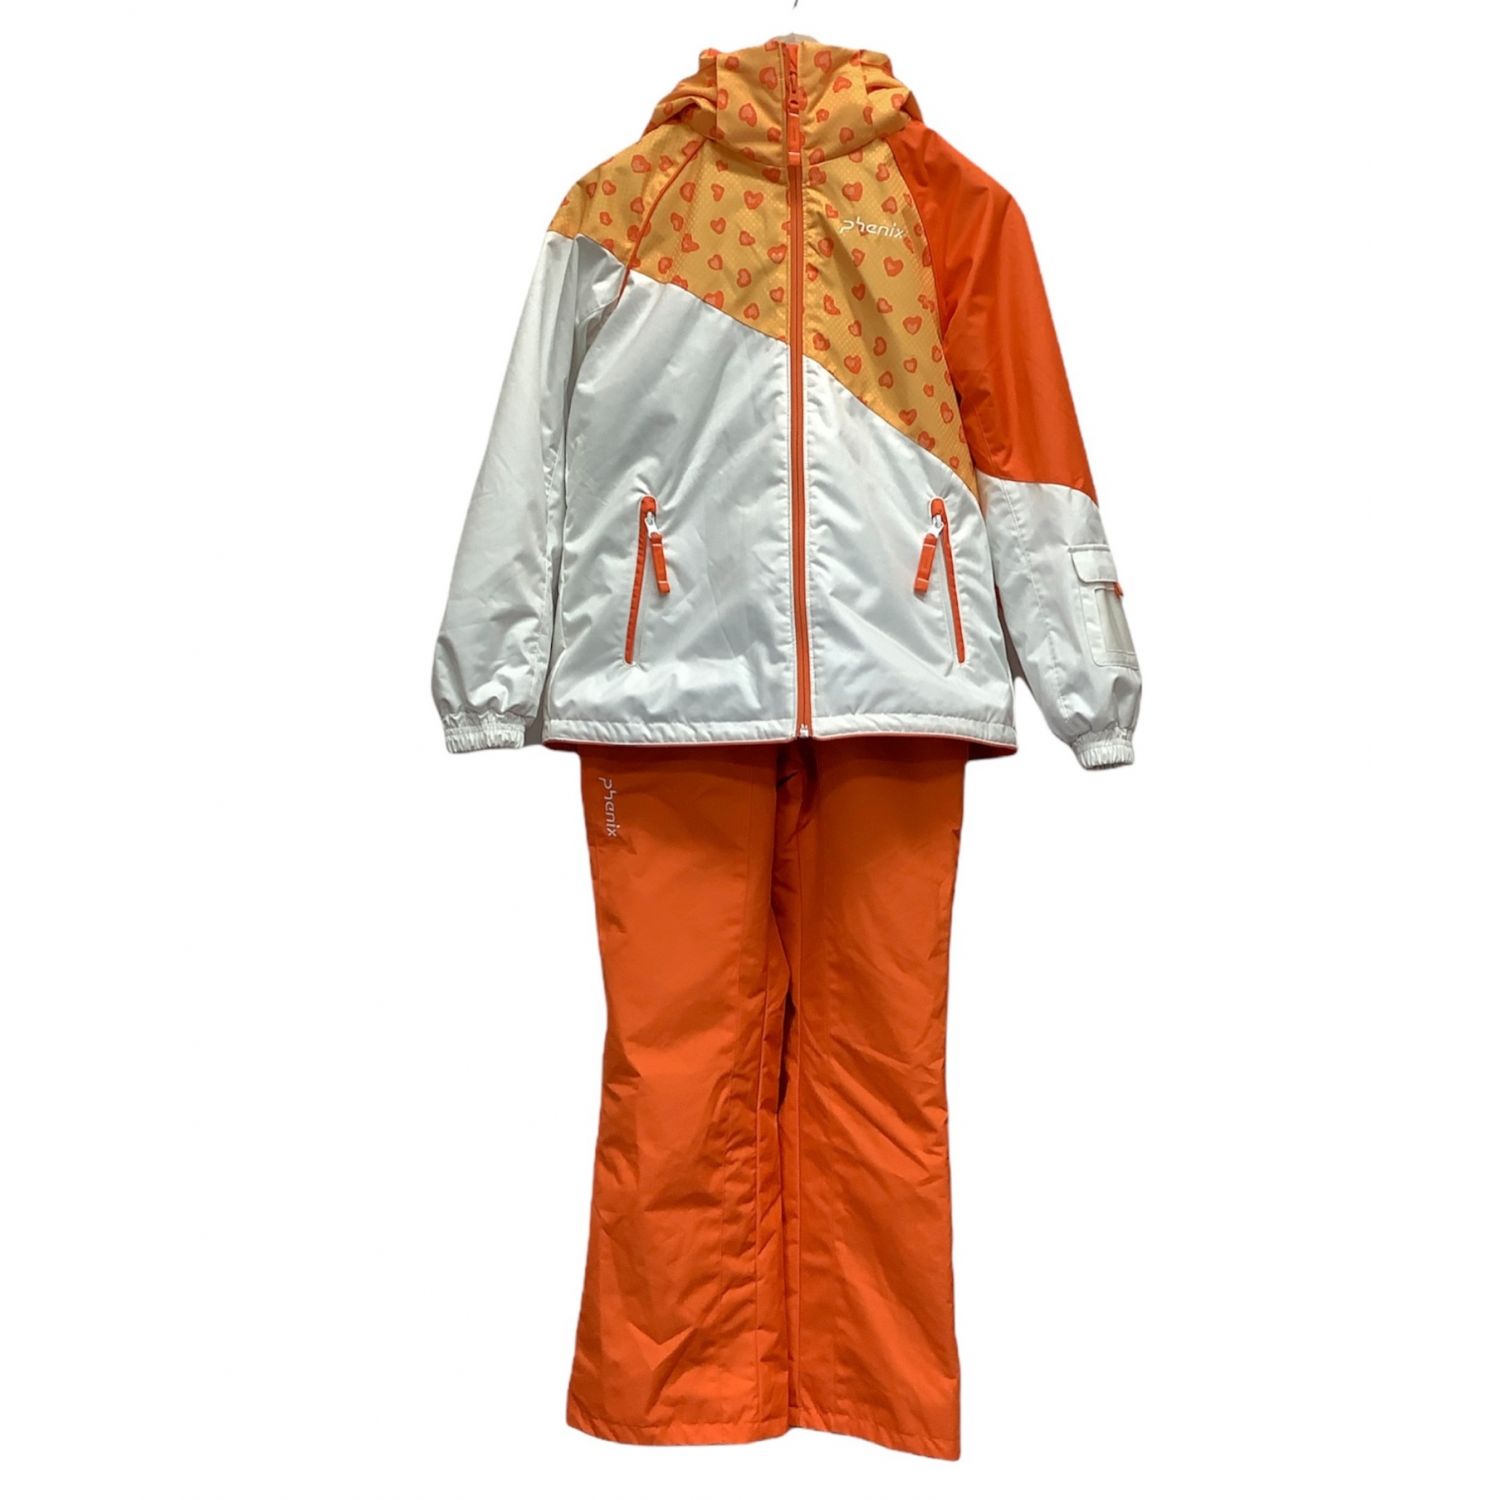 PHENIX (フェニックス) スキーウェア(セット) キッズ 150cm オレンジ 